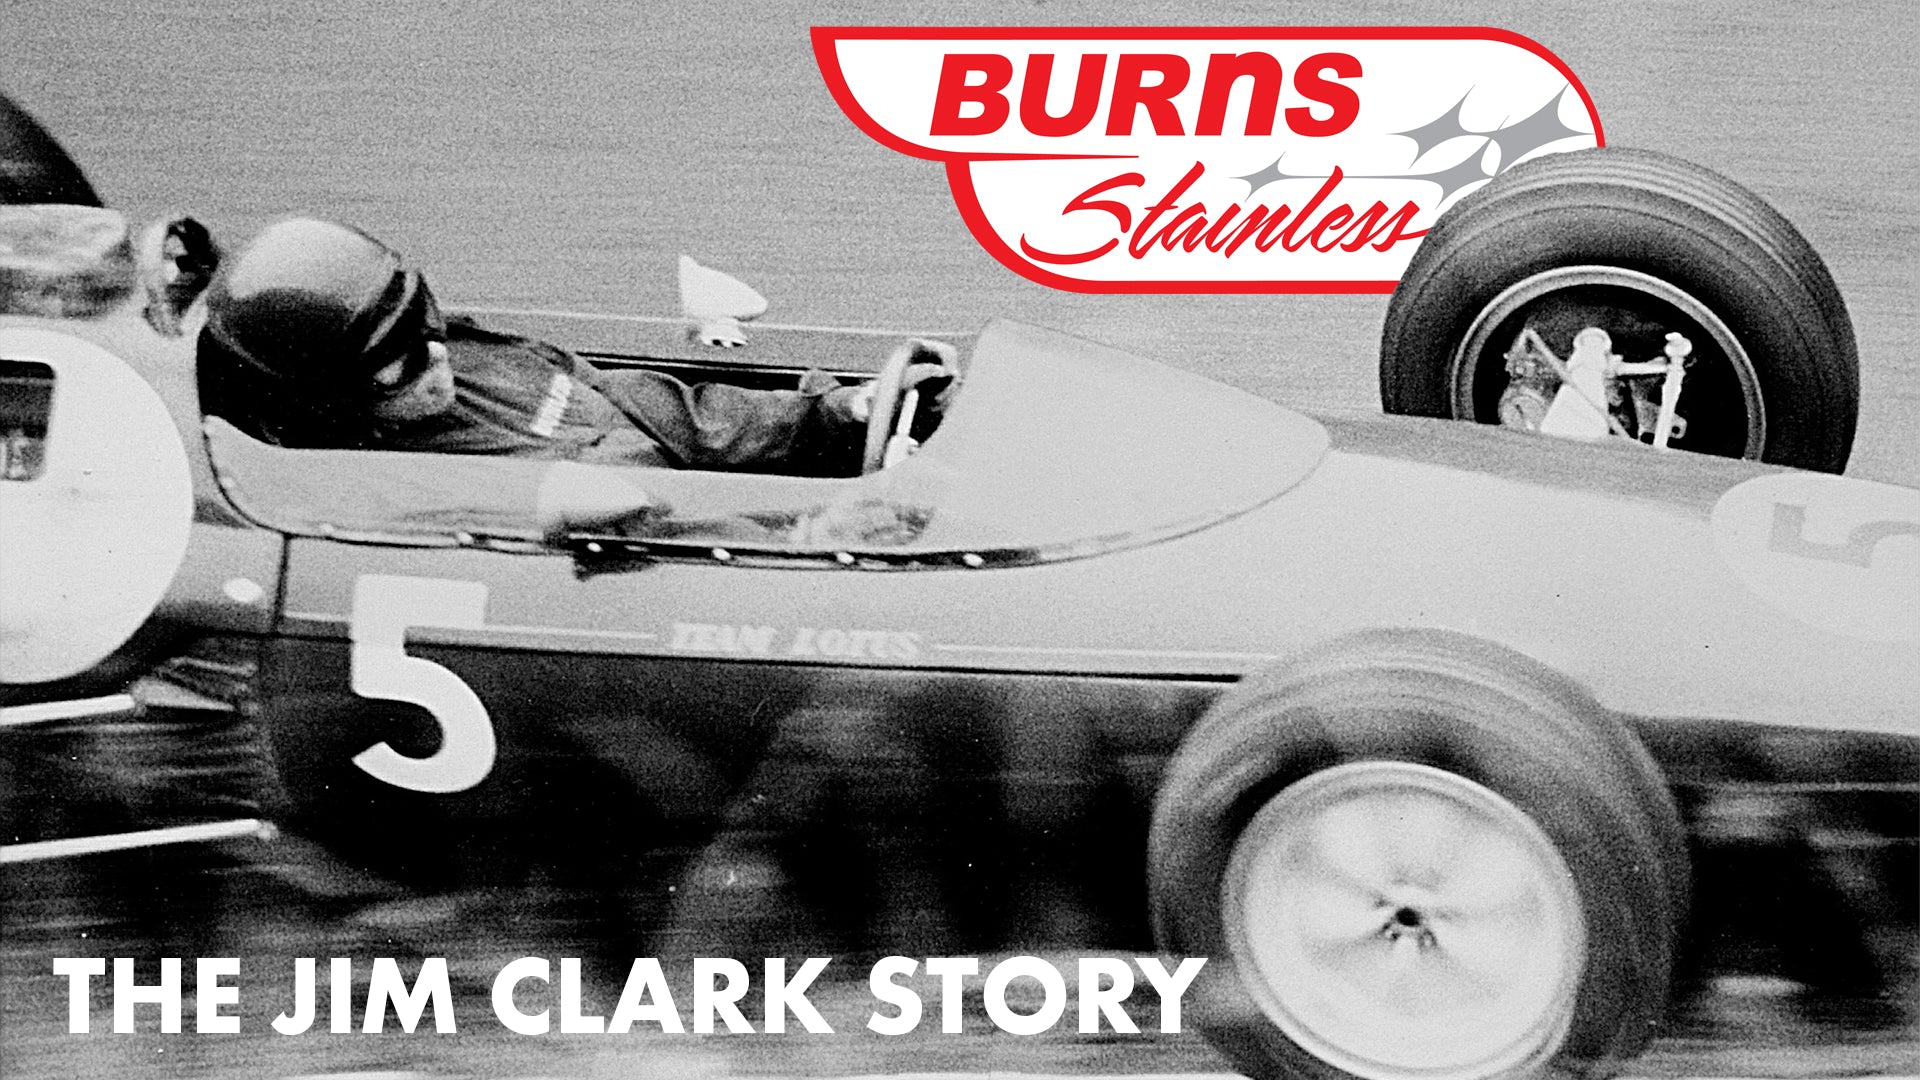 The Jim Clark Story